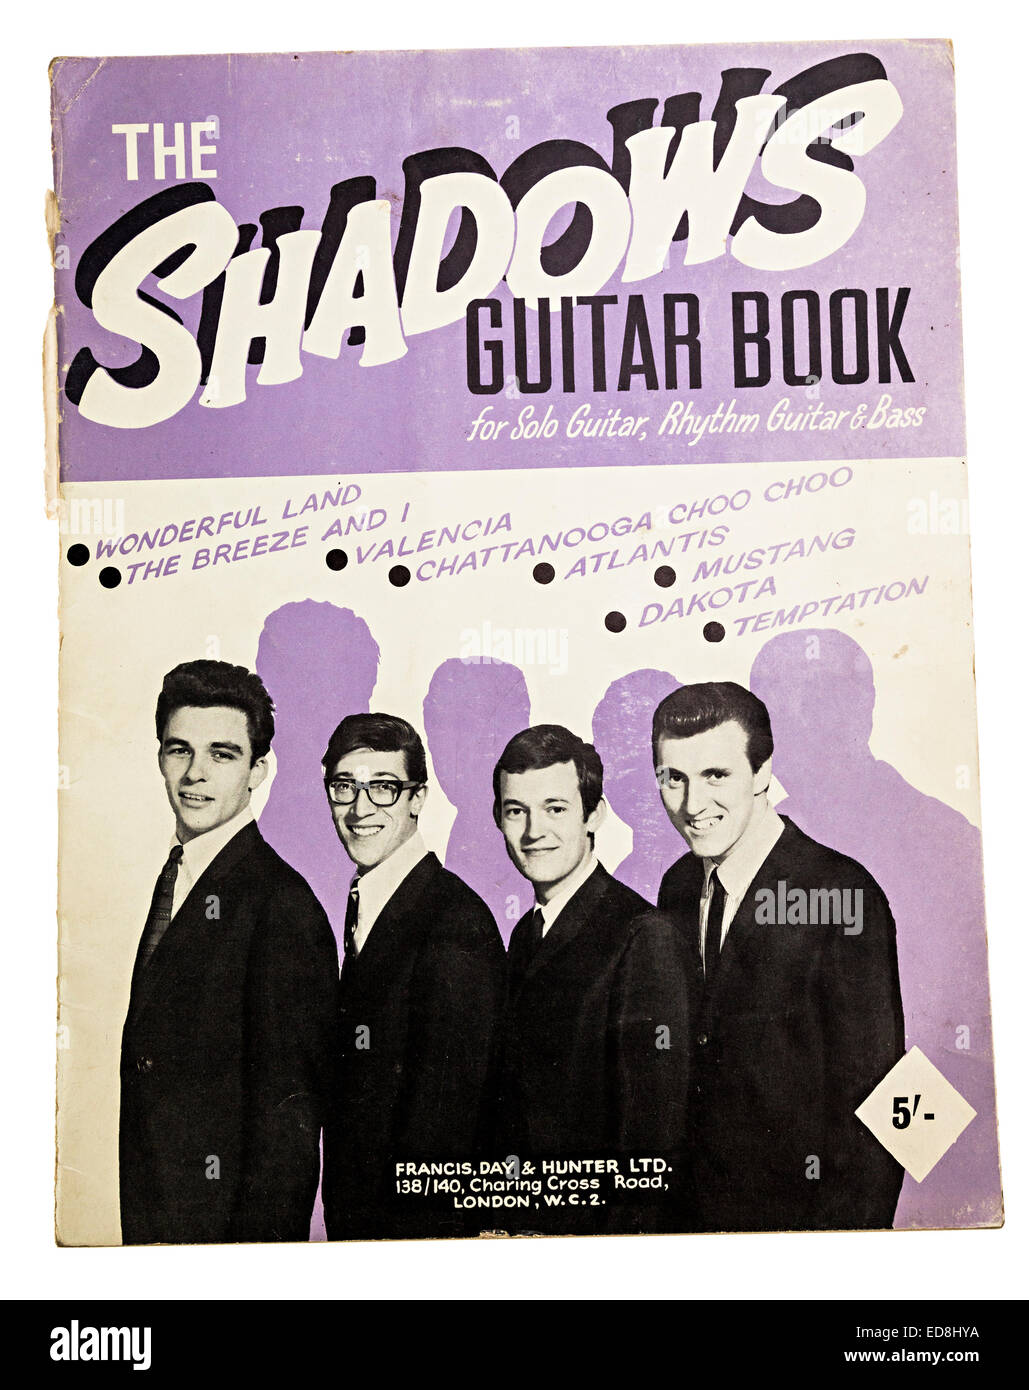 Shadows guitar book of music, 1964 Stock Photo